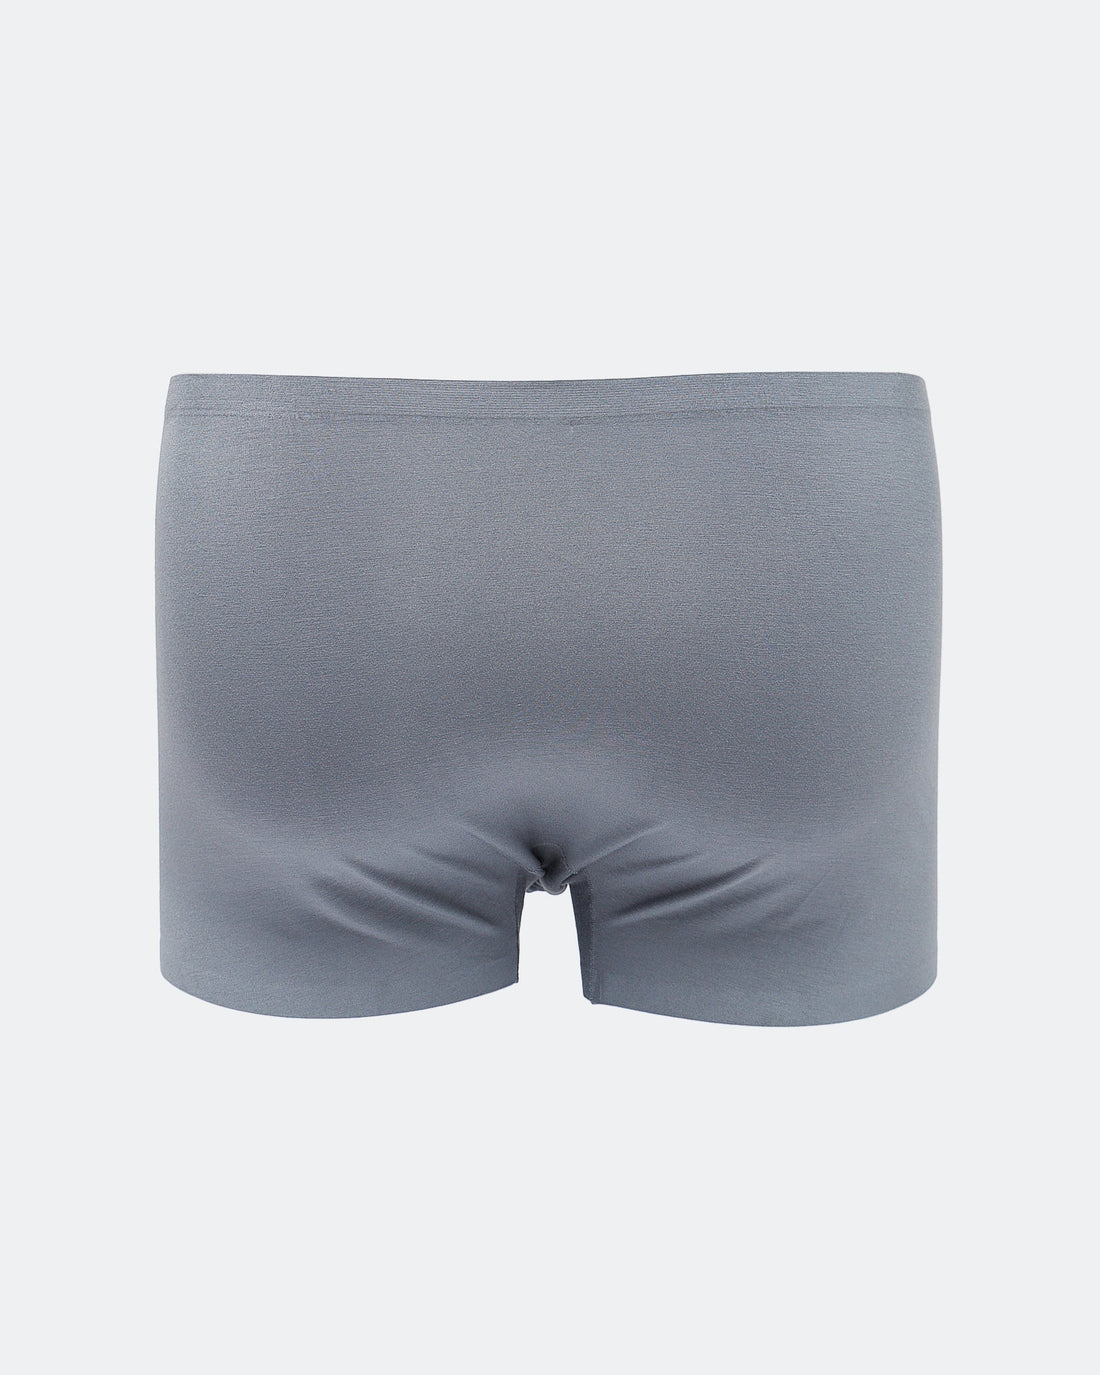 MOI OUTFIT-H Logo Printed Men Underwear 6.50